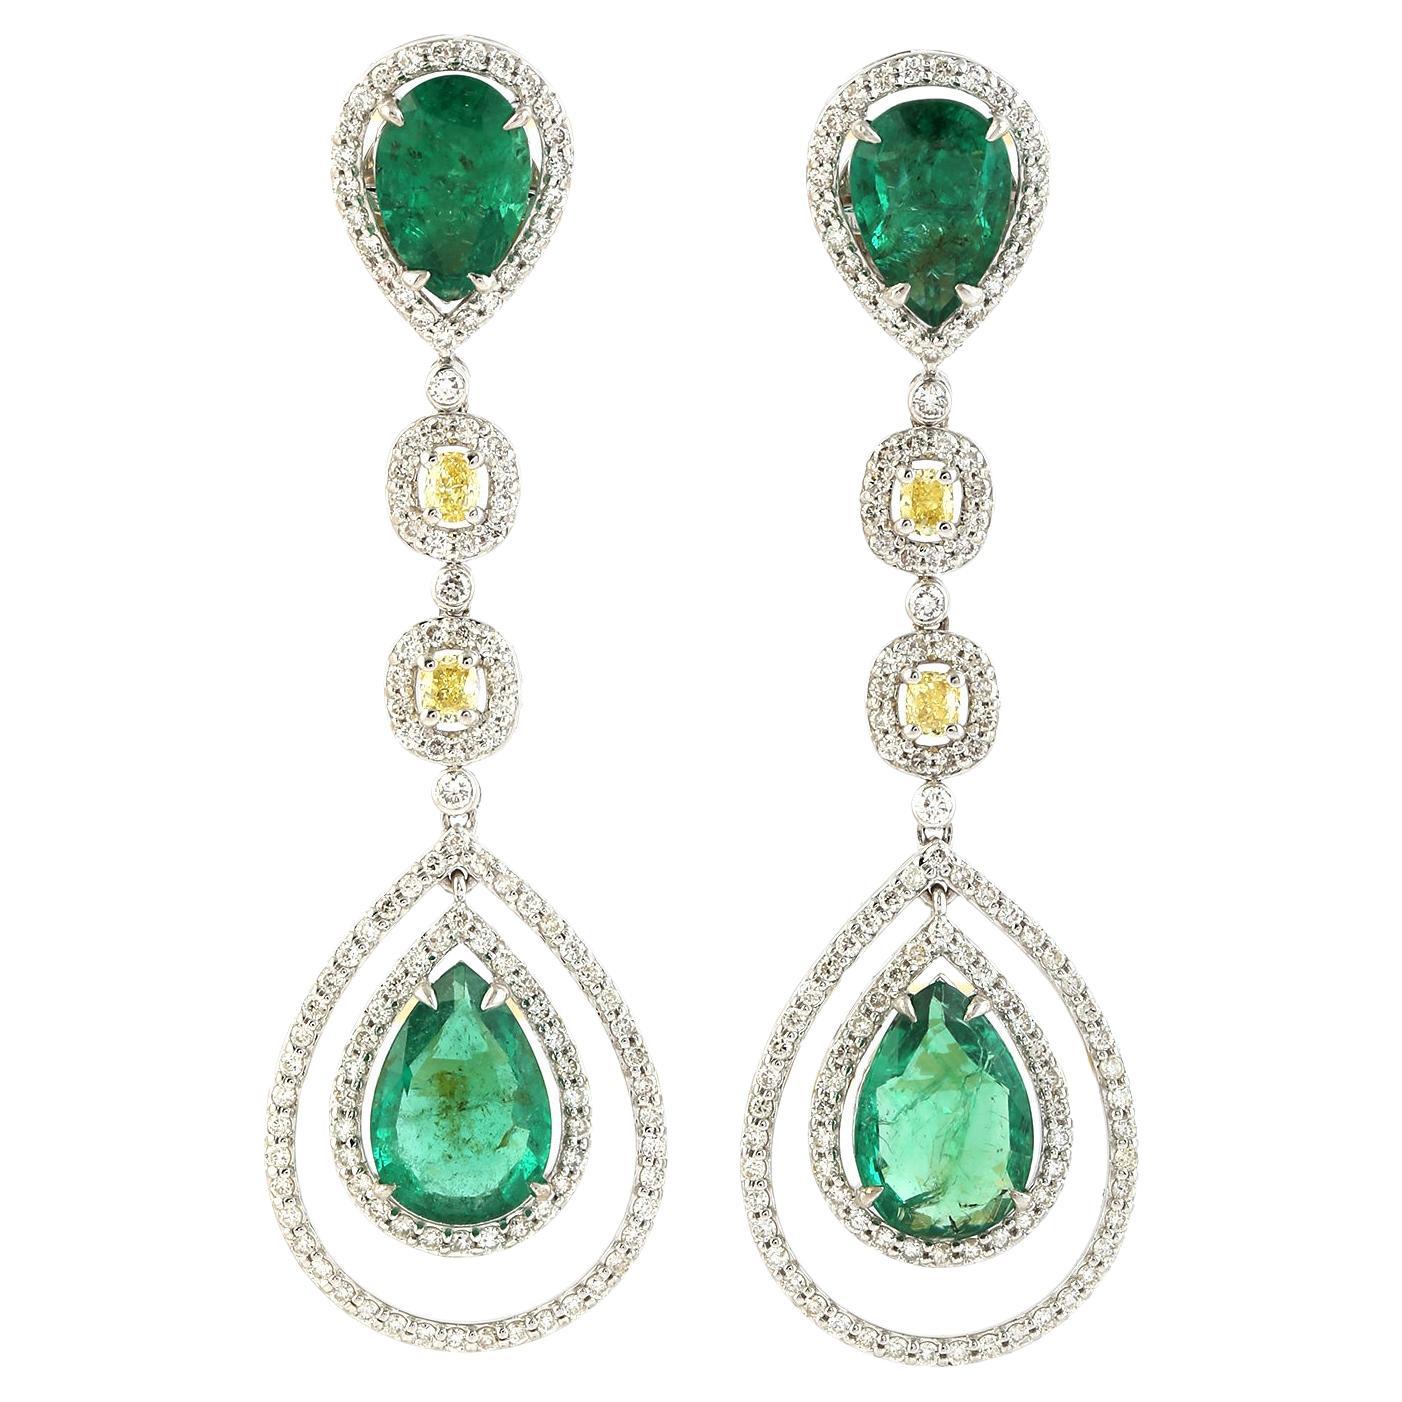 Pear Drops Zambian Emeralds Earrings with Cushion Shaped Yellow Diamonds in 18k